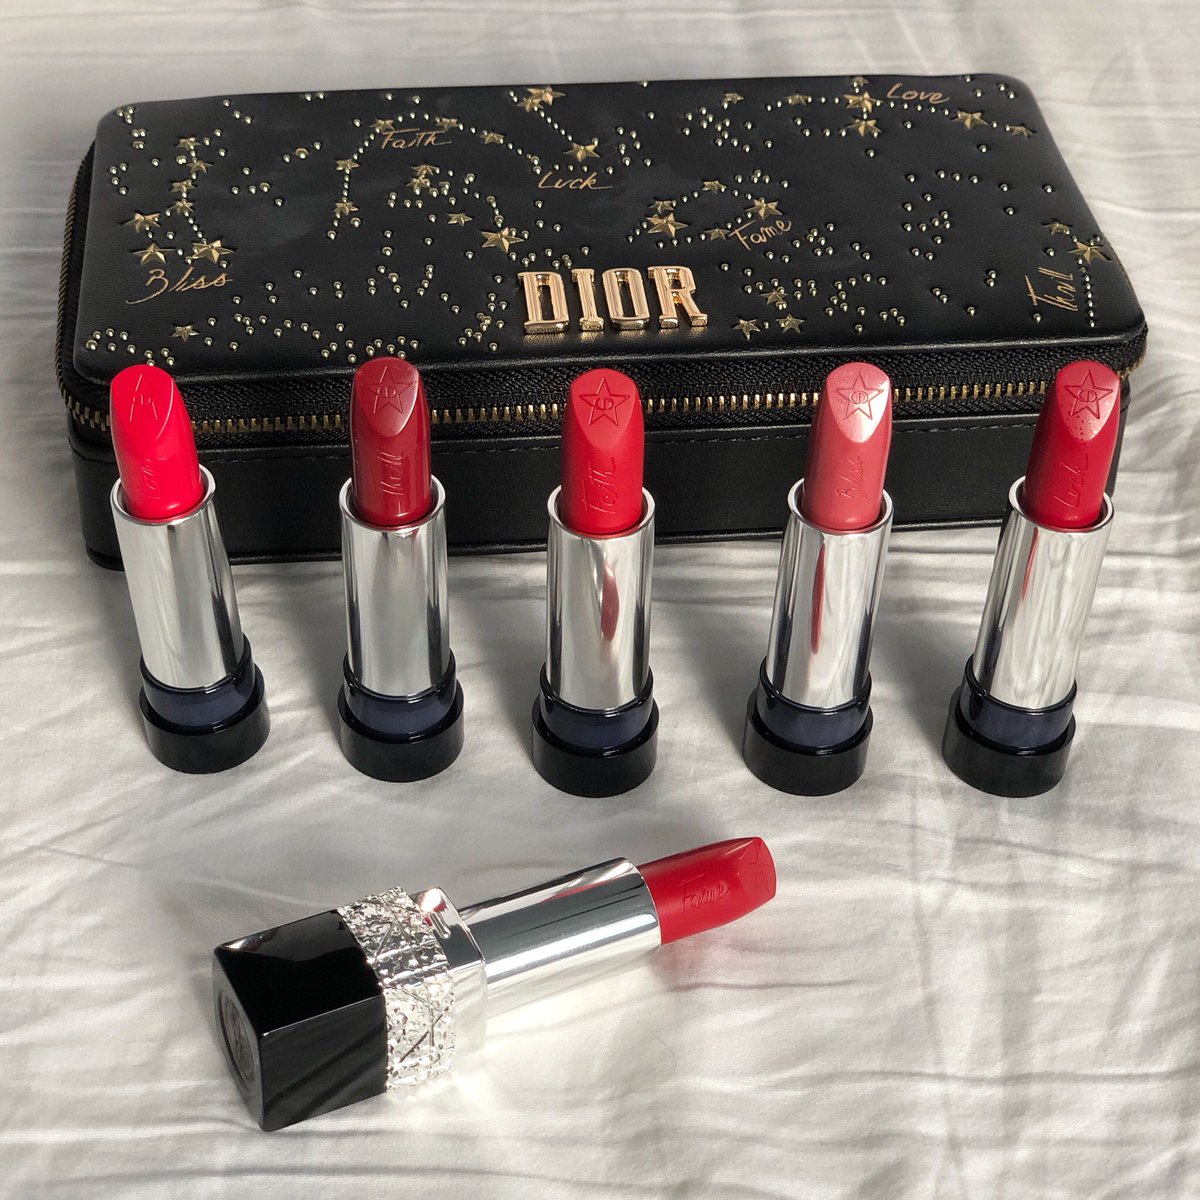 dior holiday 2018 makeup collection